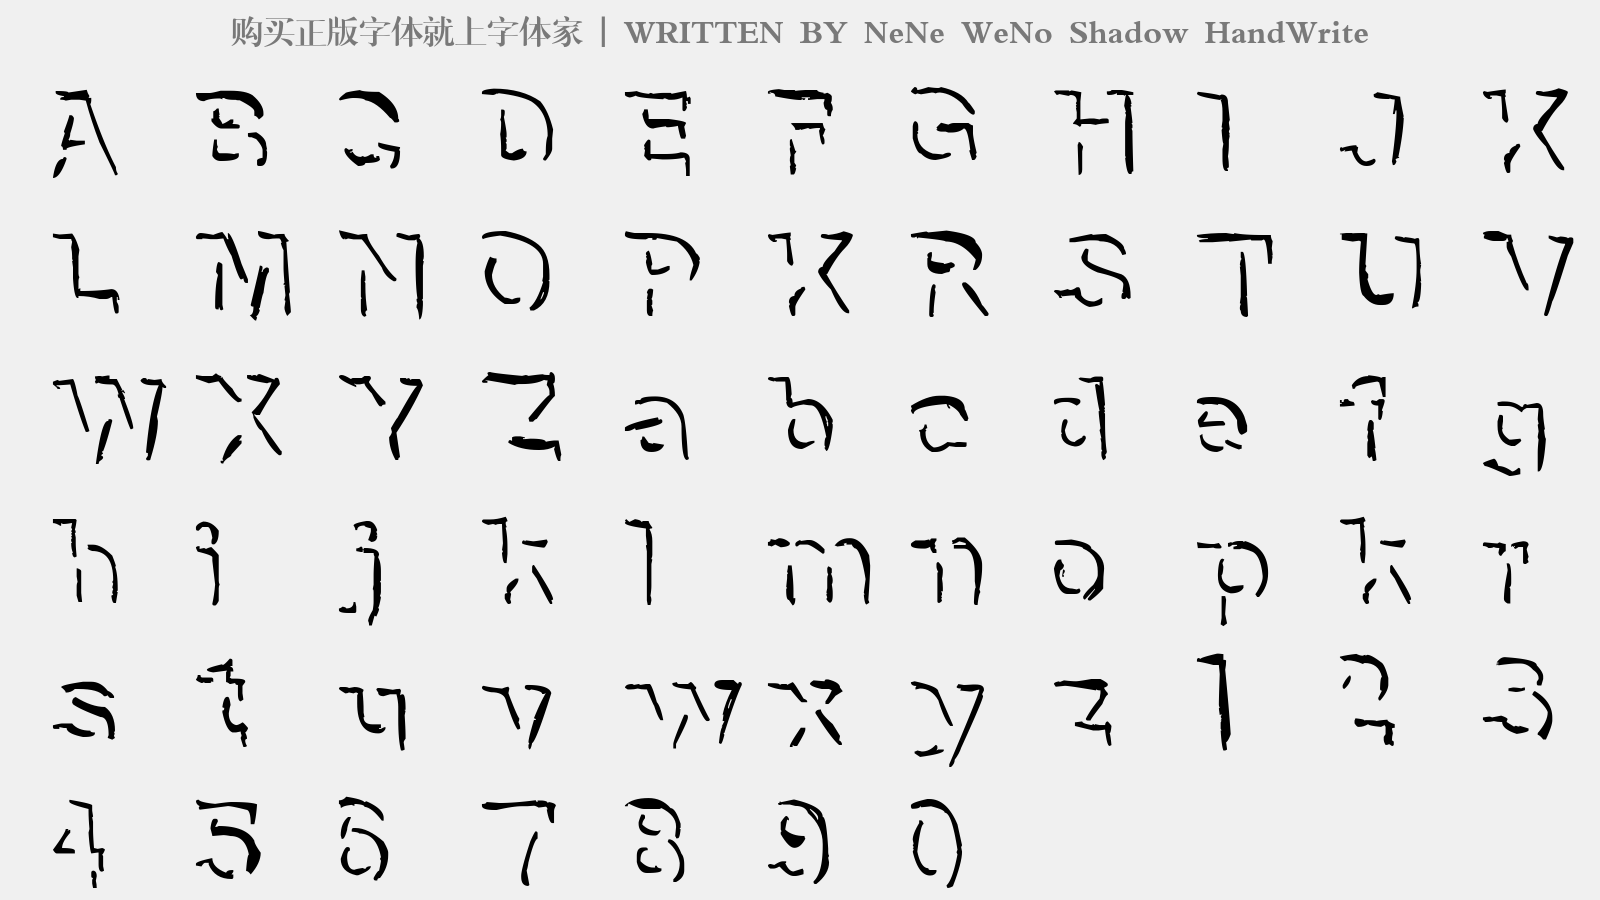 NeNe WeNo Shadow HandWrite - 大写字母/小写字母/数字